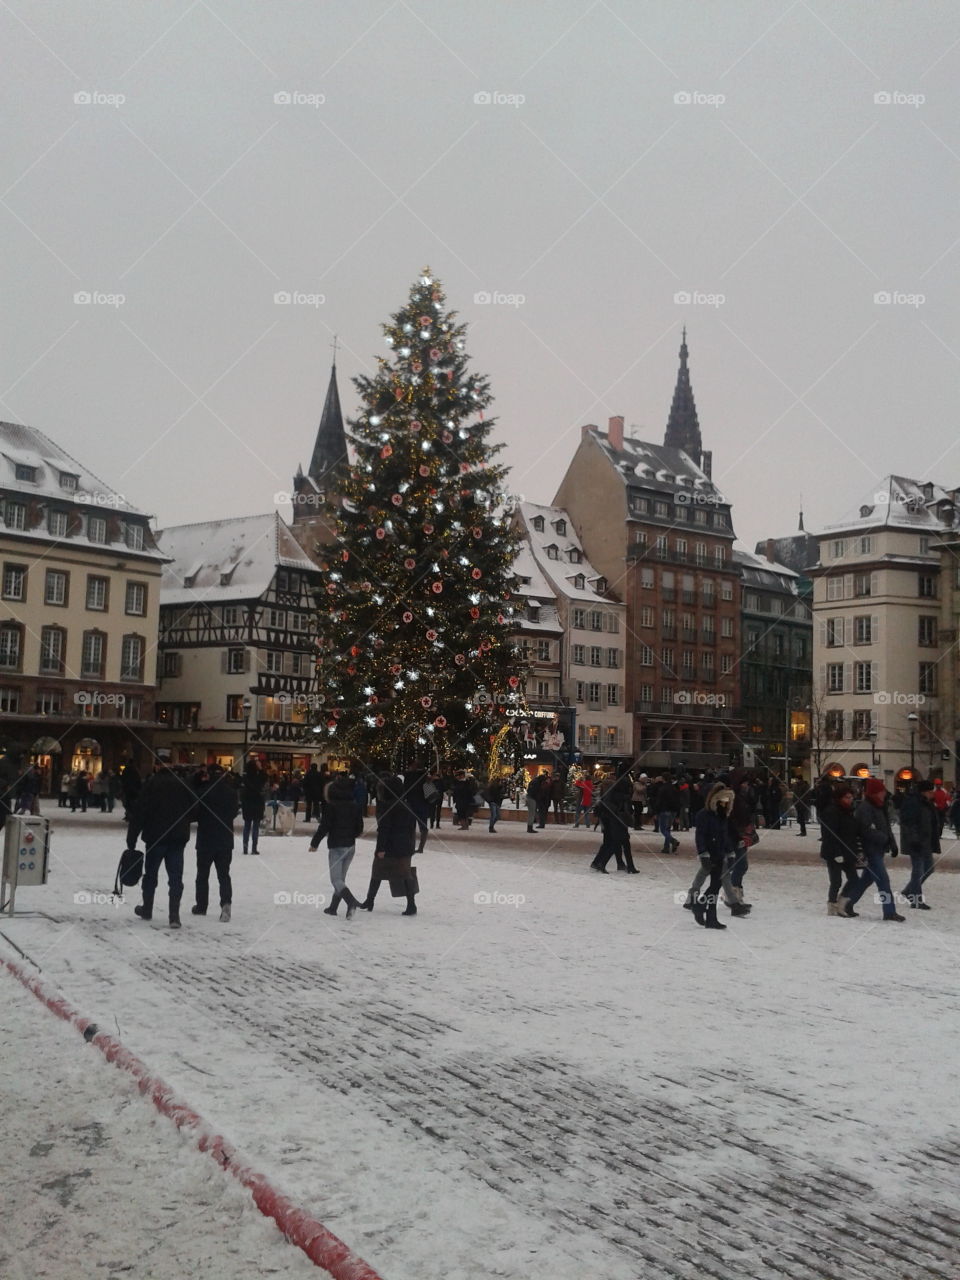 Christmass tree in Strasbourg. achrismas tree in Strasbourg France